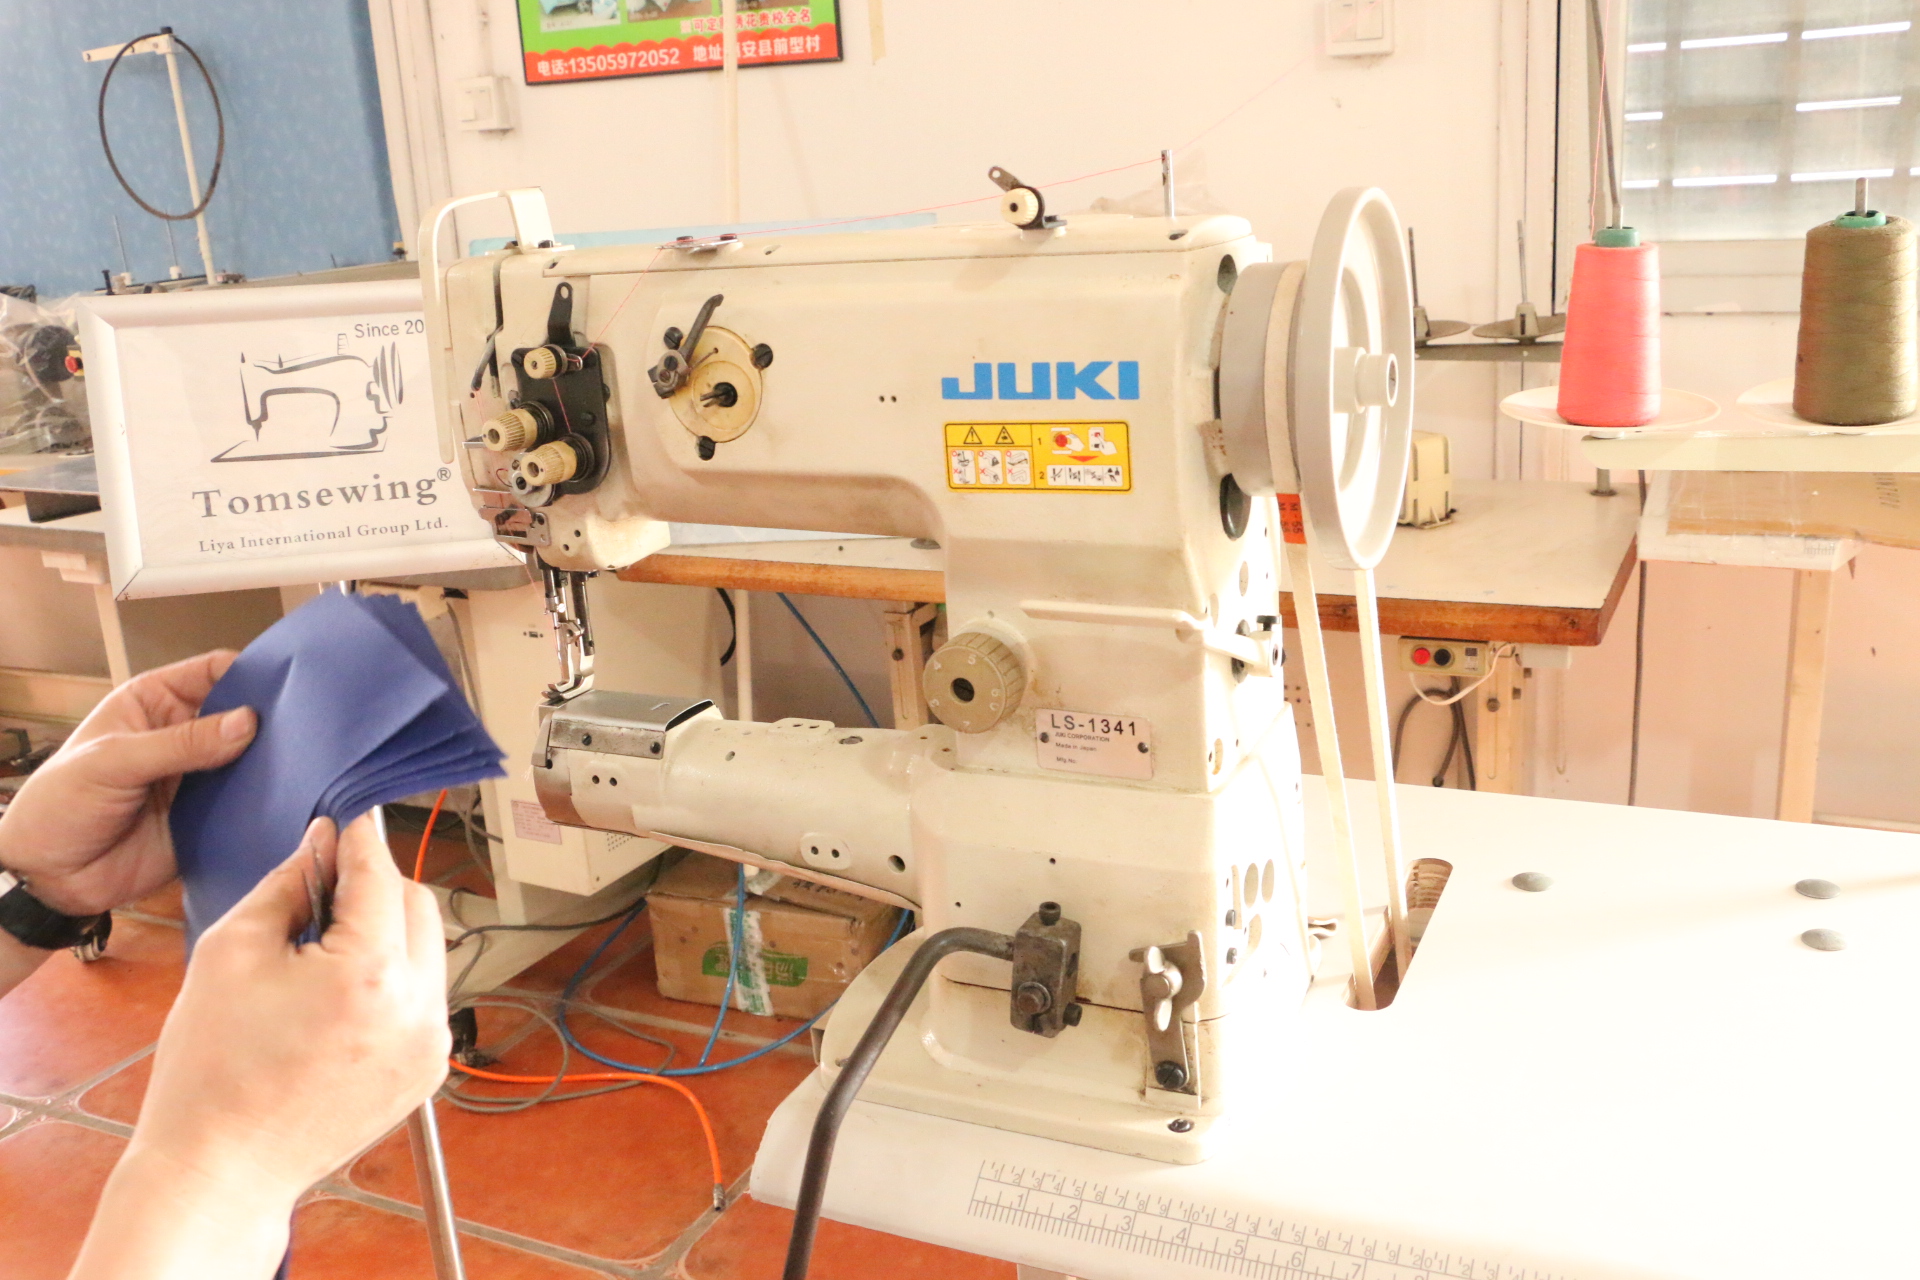 Juki Ls 1341 Cylinder Bed Sewing Machine Tomsewing